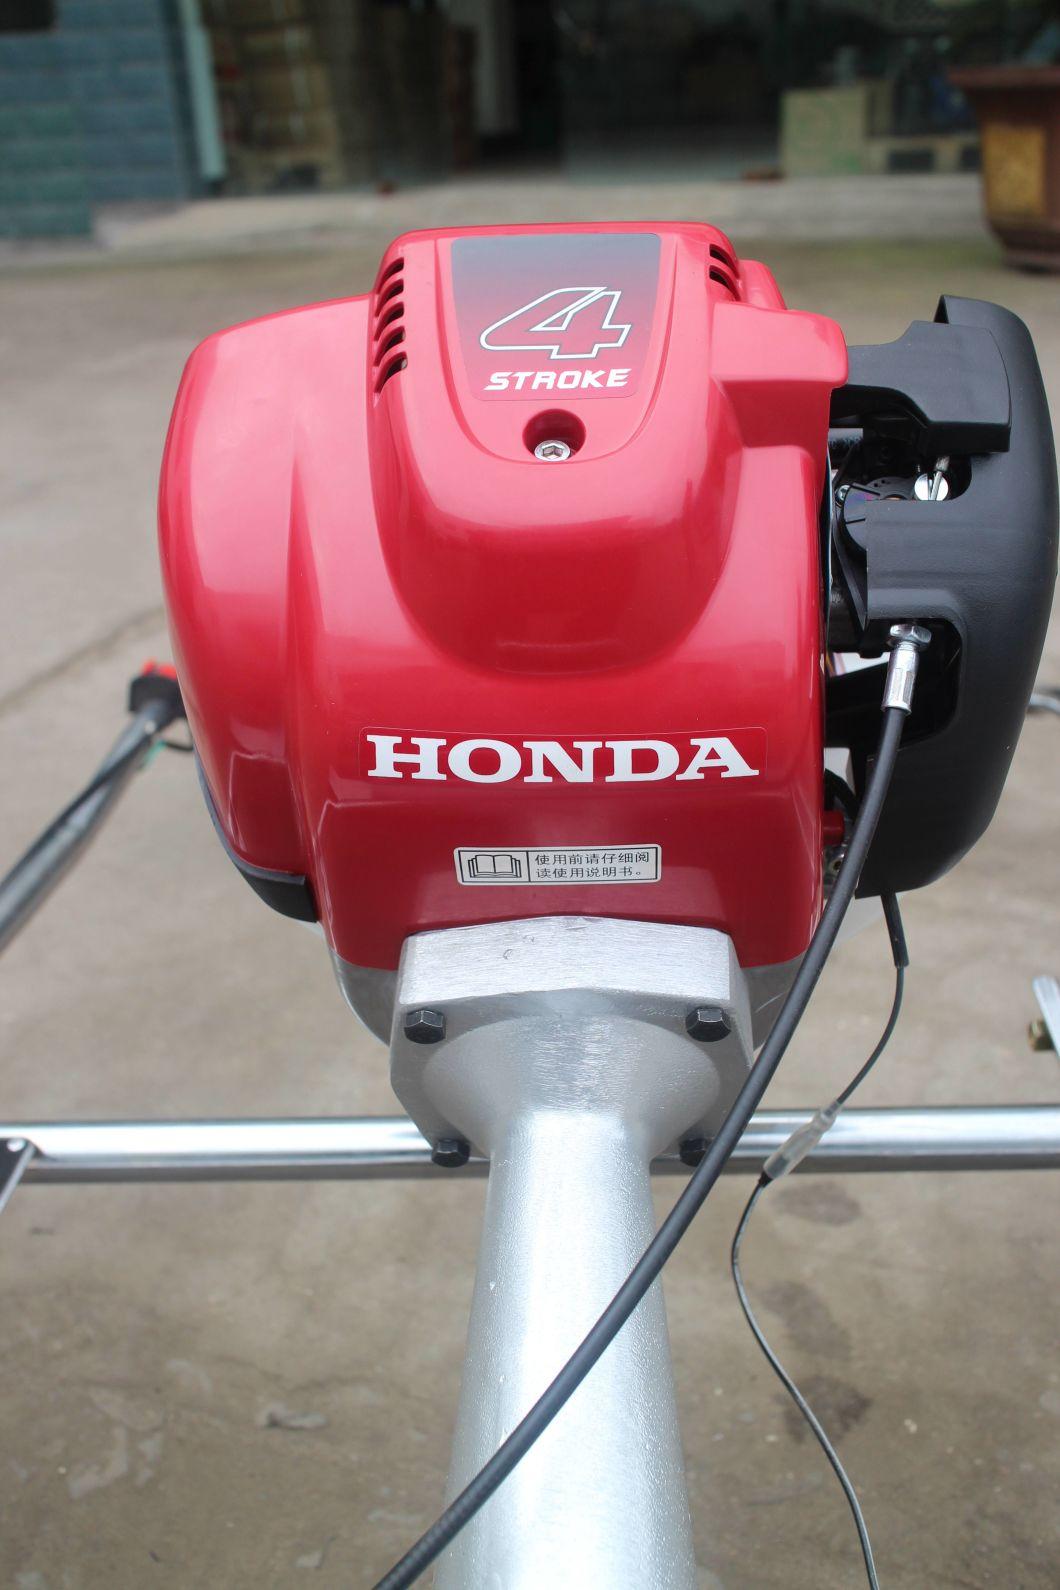 Stainless Steel Honda Vibrating Laser Concrete Screed